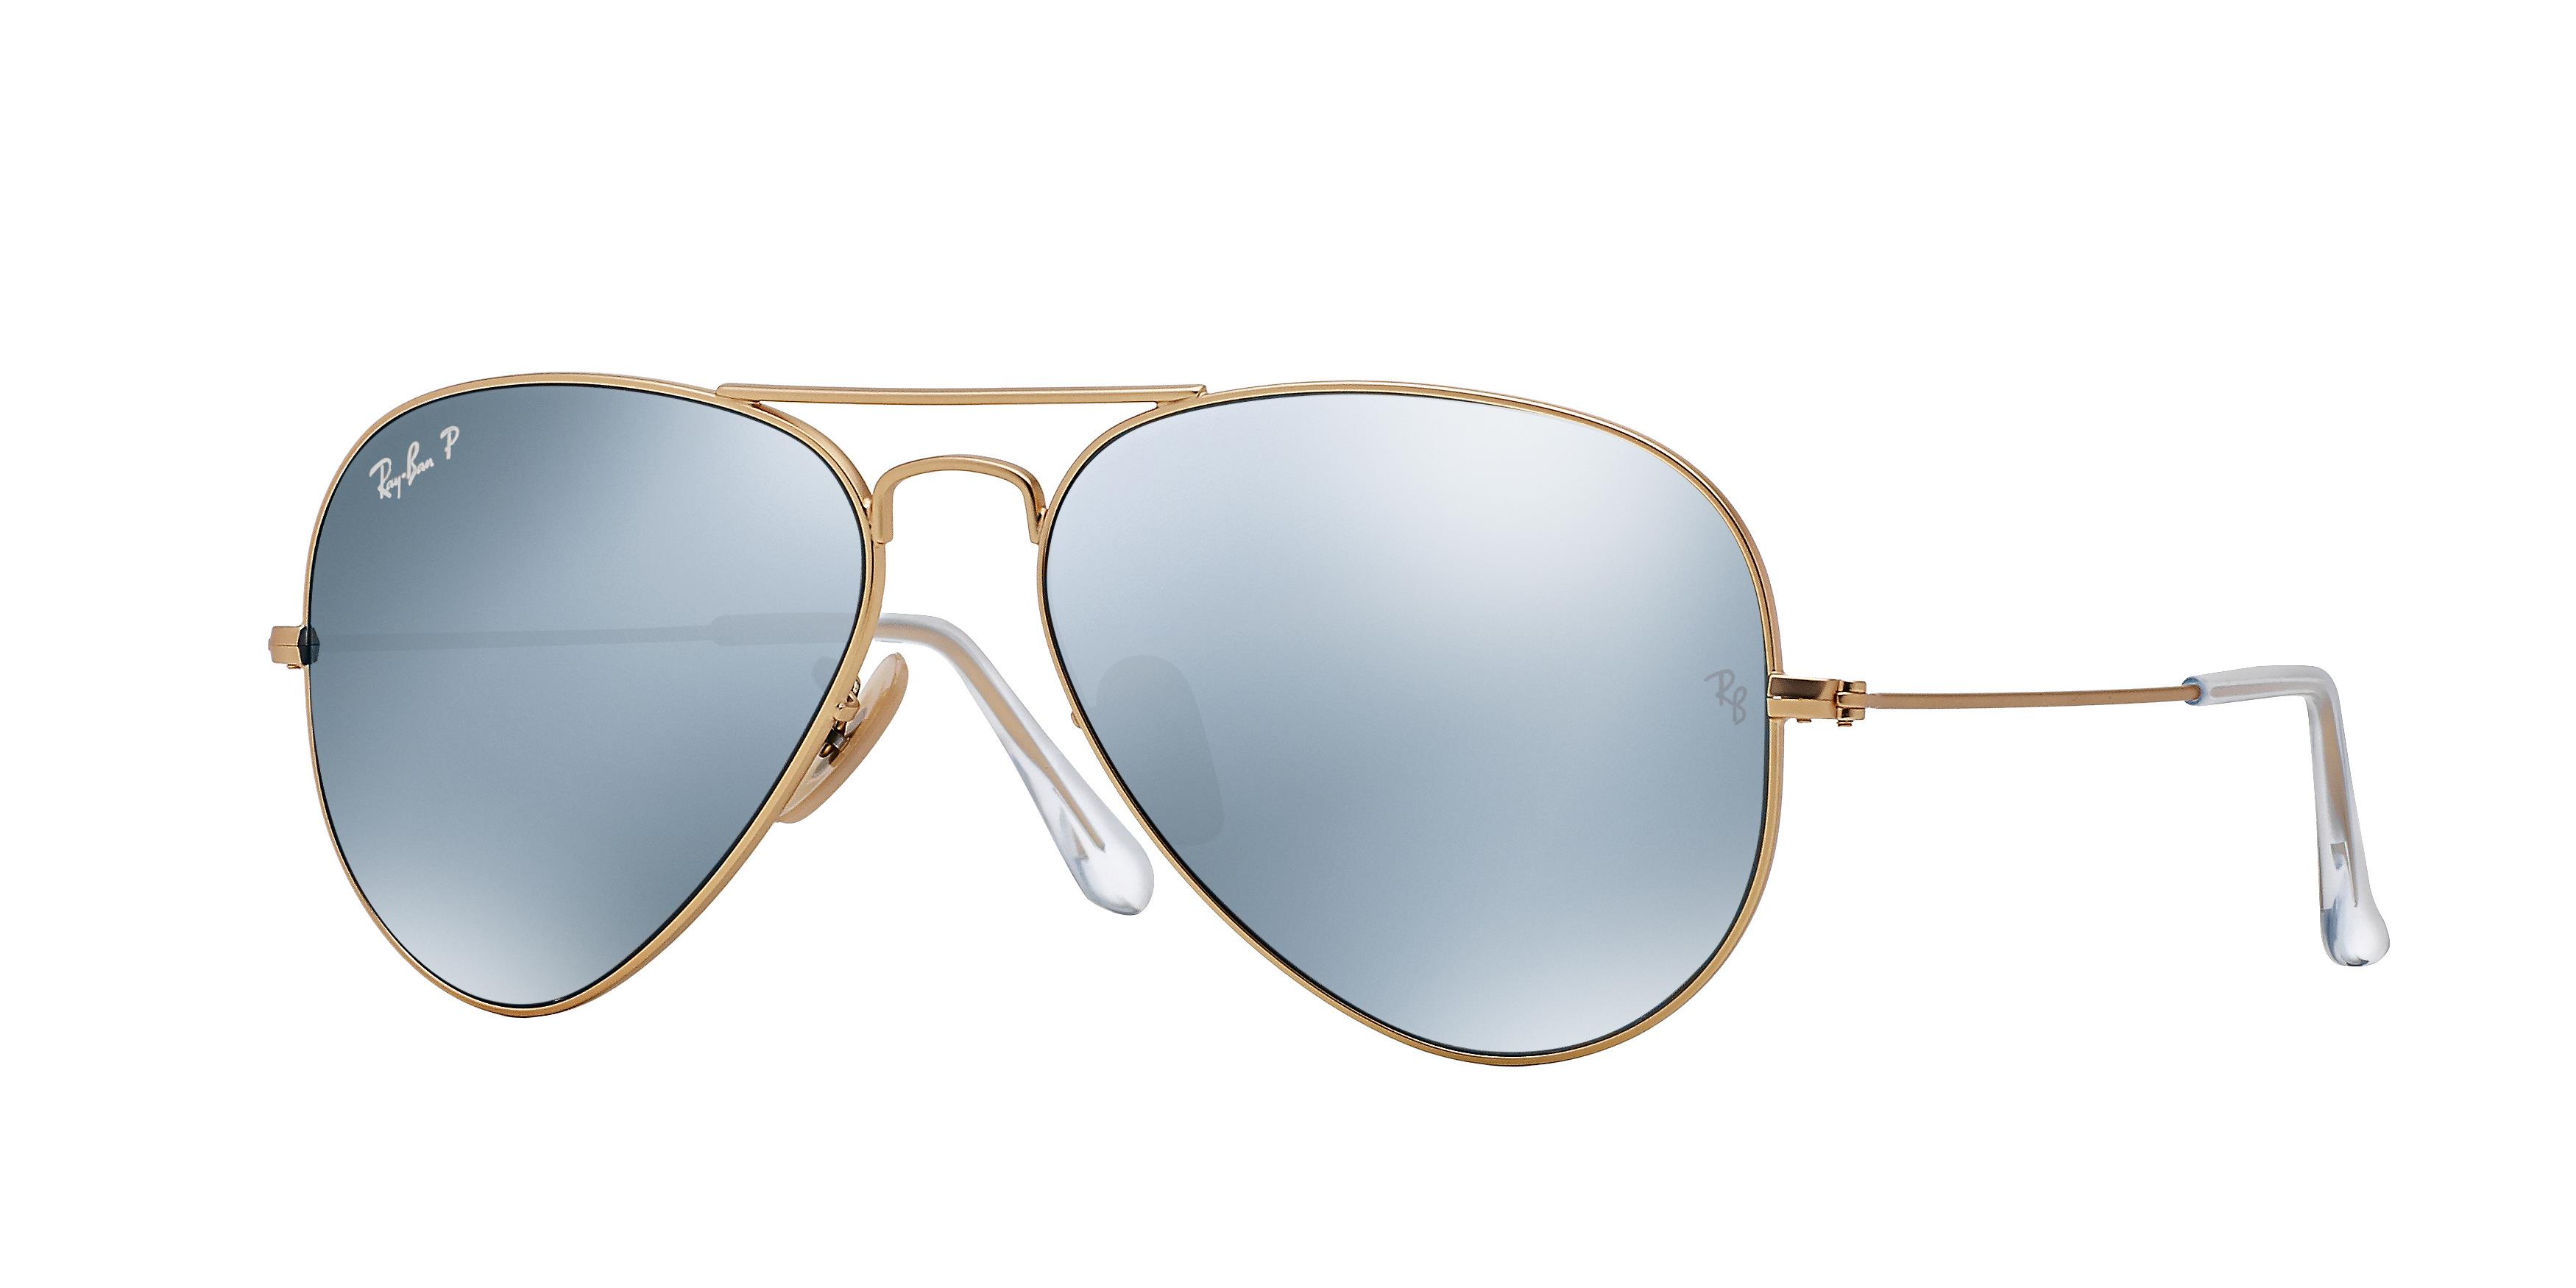 Ray Ban Rb Aviator Classic Flash Mirrored Sunglasses Matte Gold